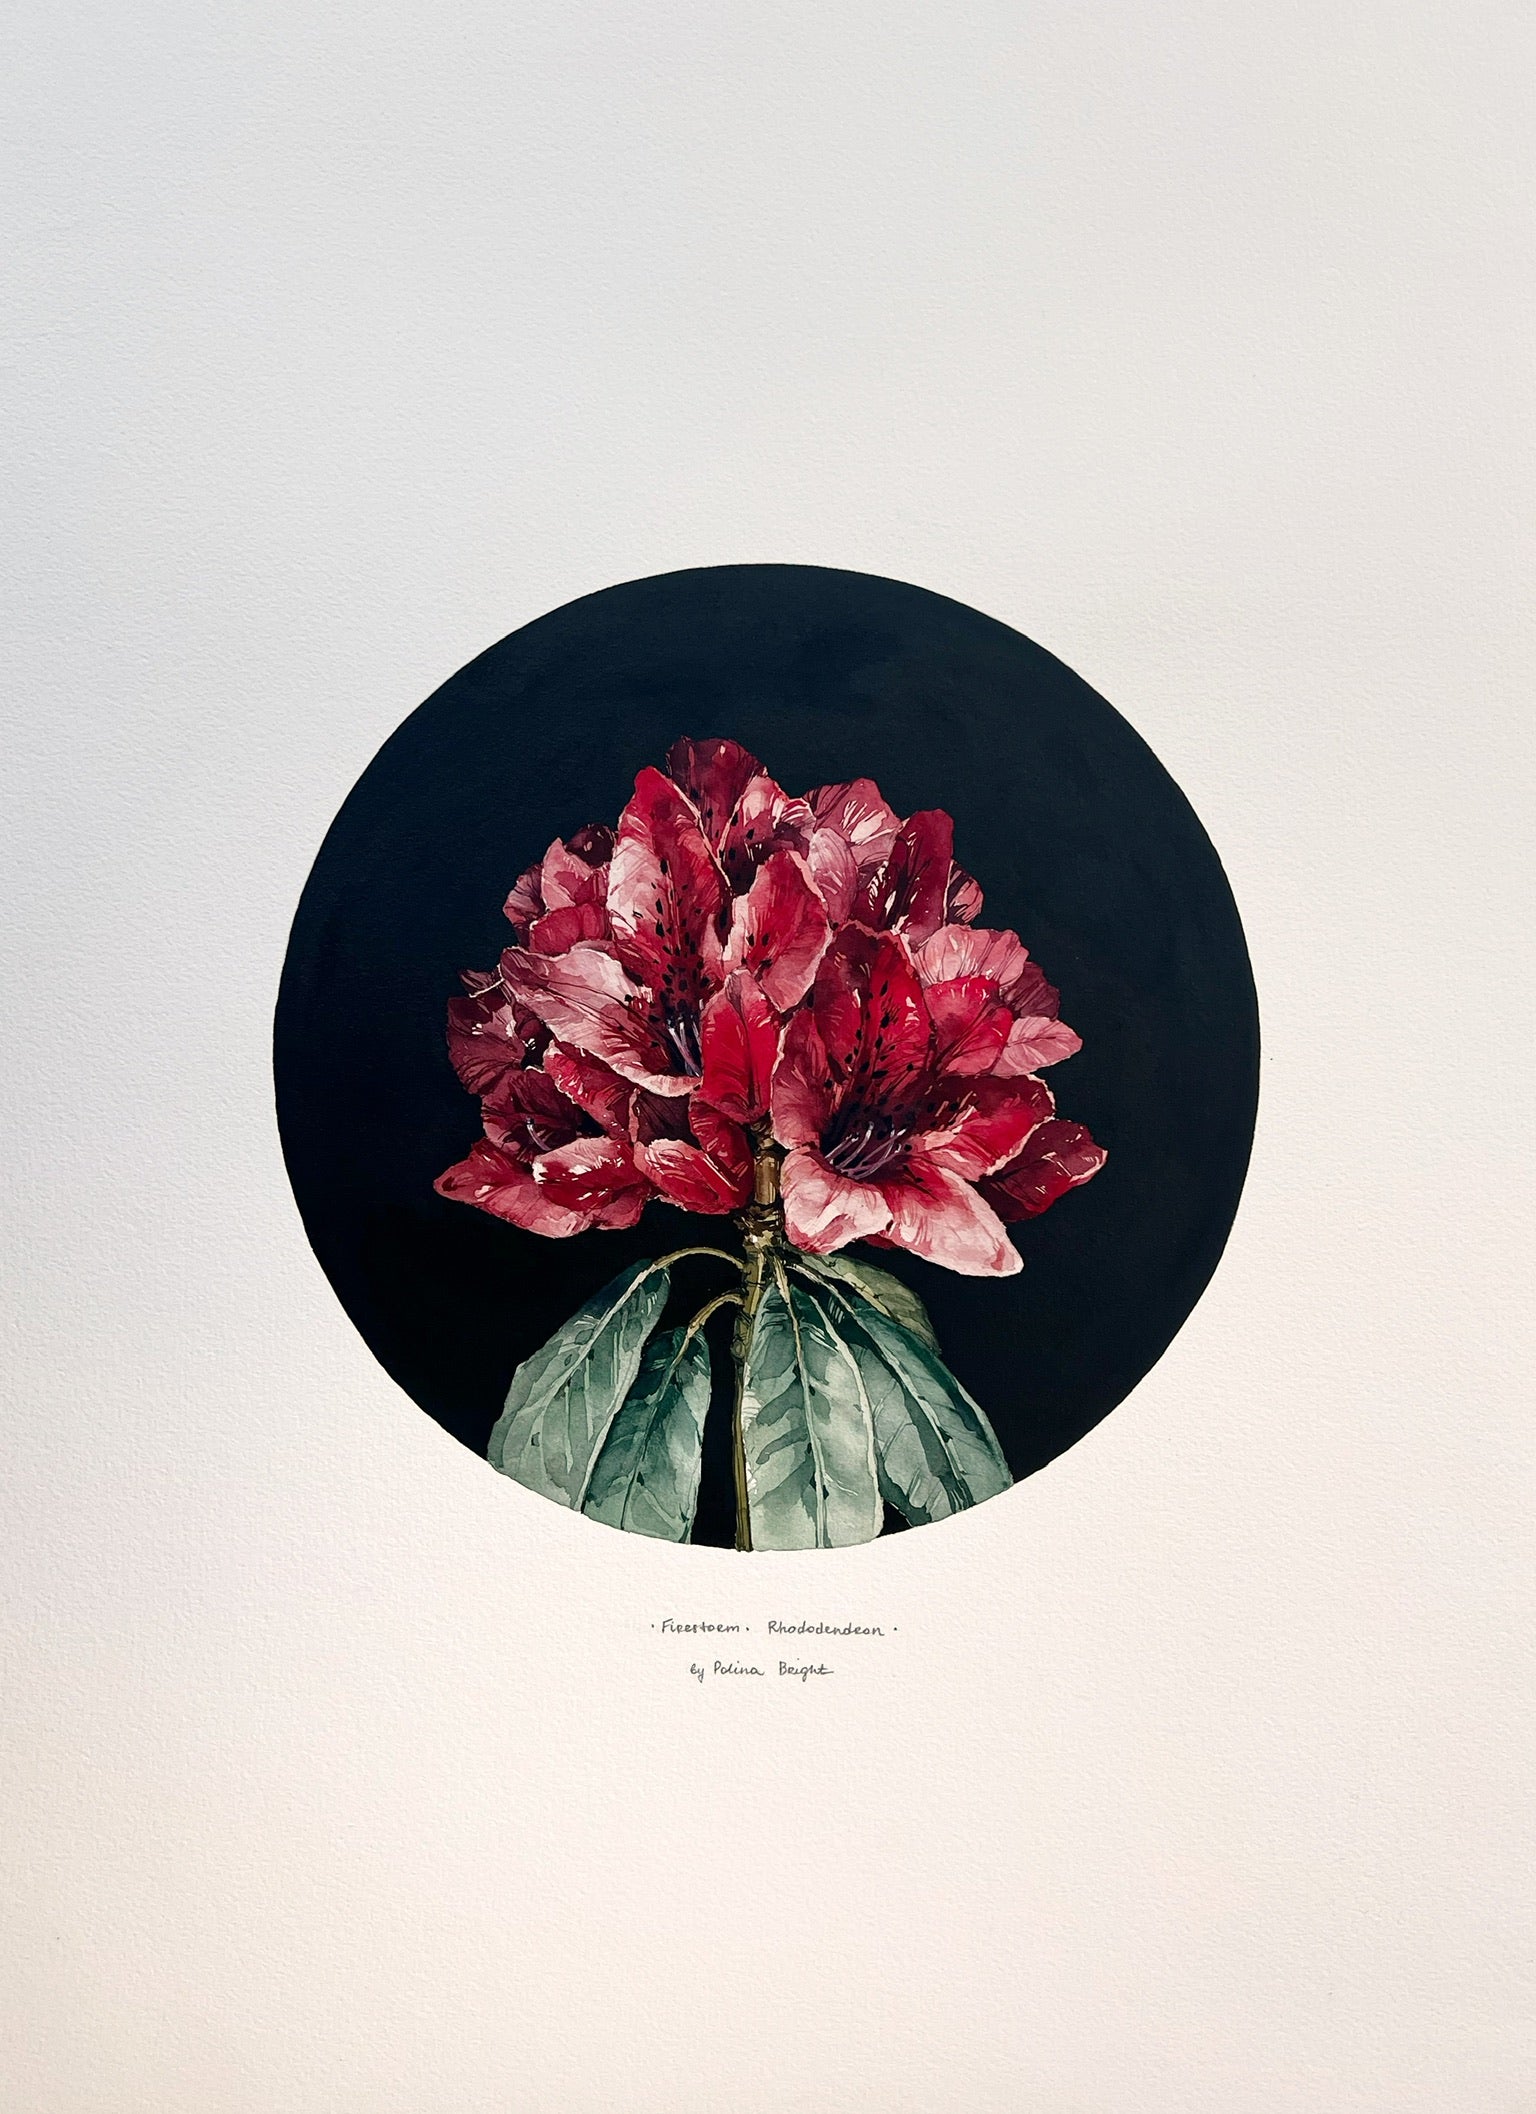 Firestorm rhododendron - original painting